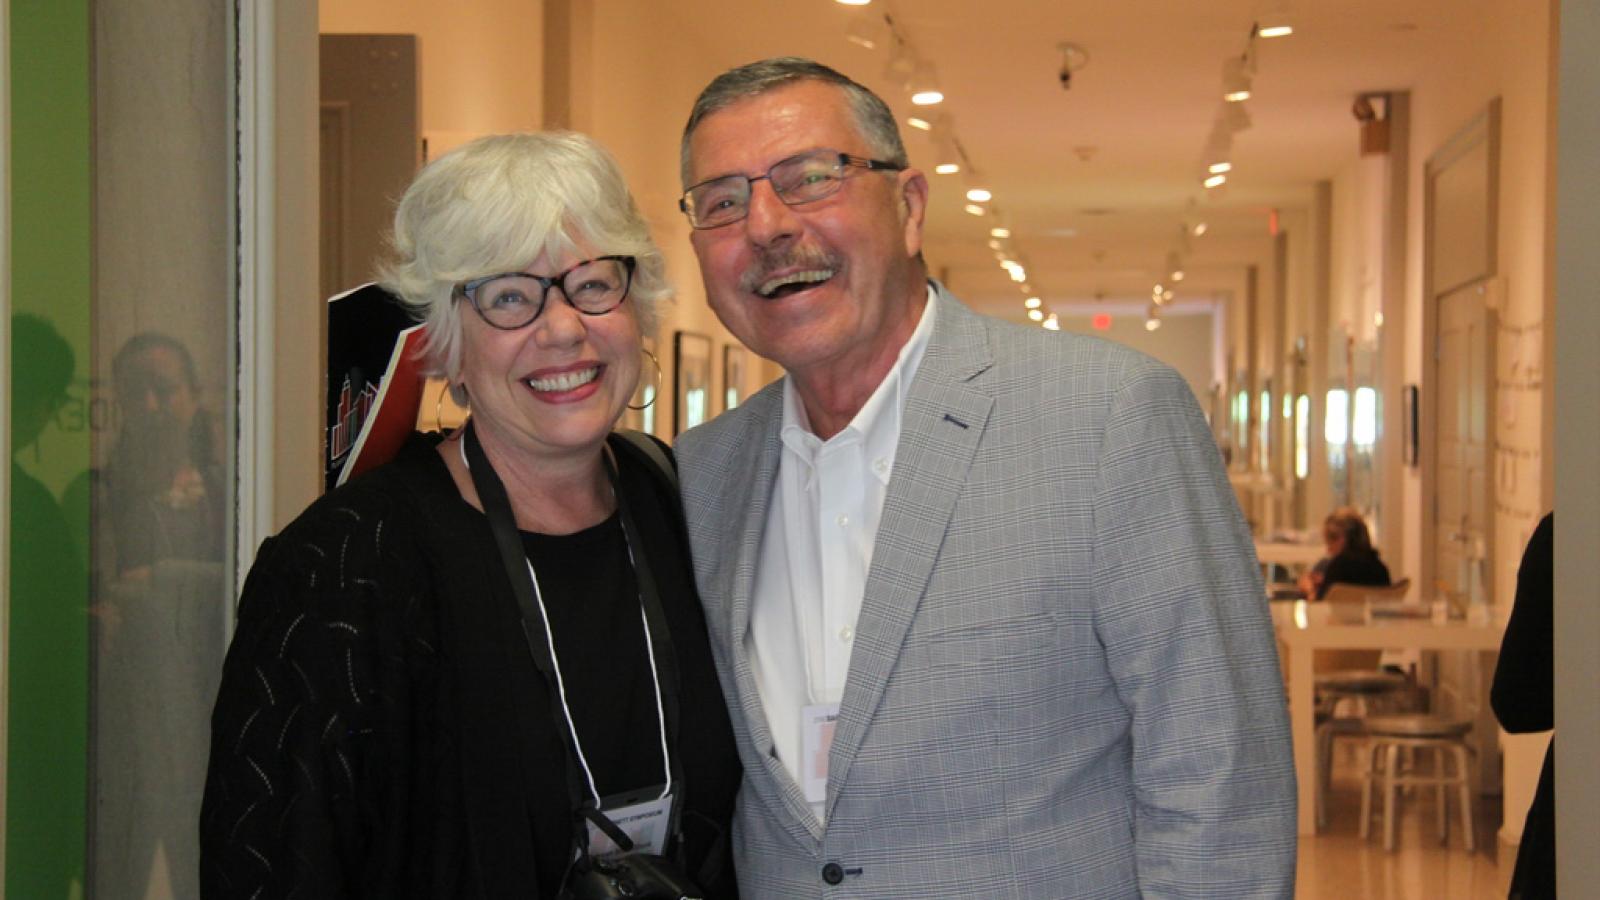 Dr.'s Debbie Smith-Shank and Wayne Lawson at the 2016 Barnett Symposium